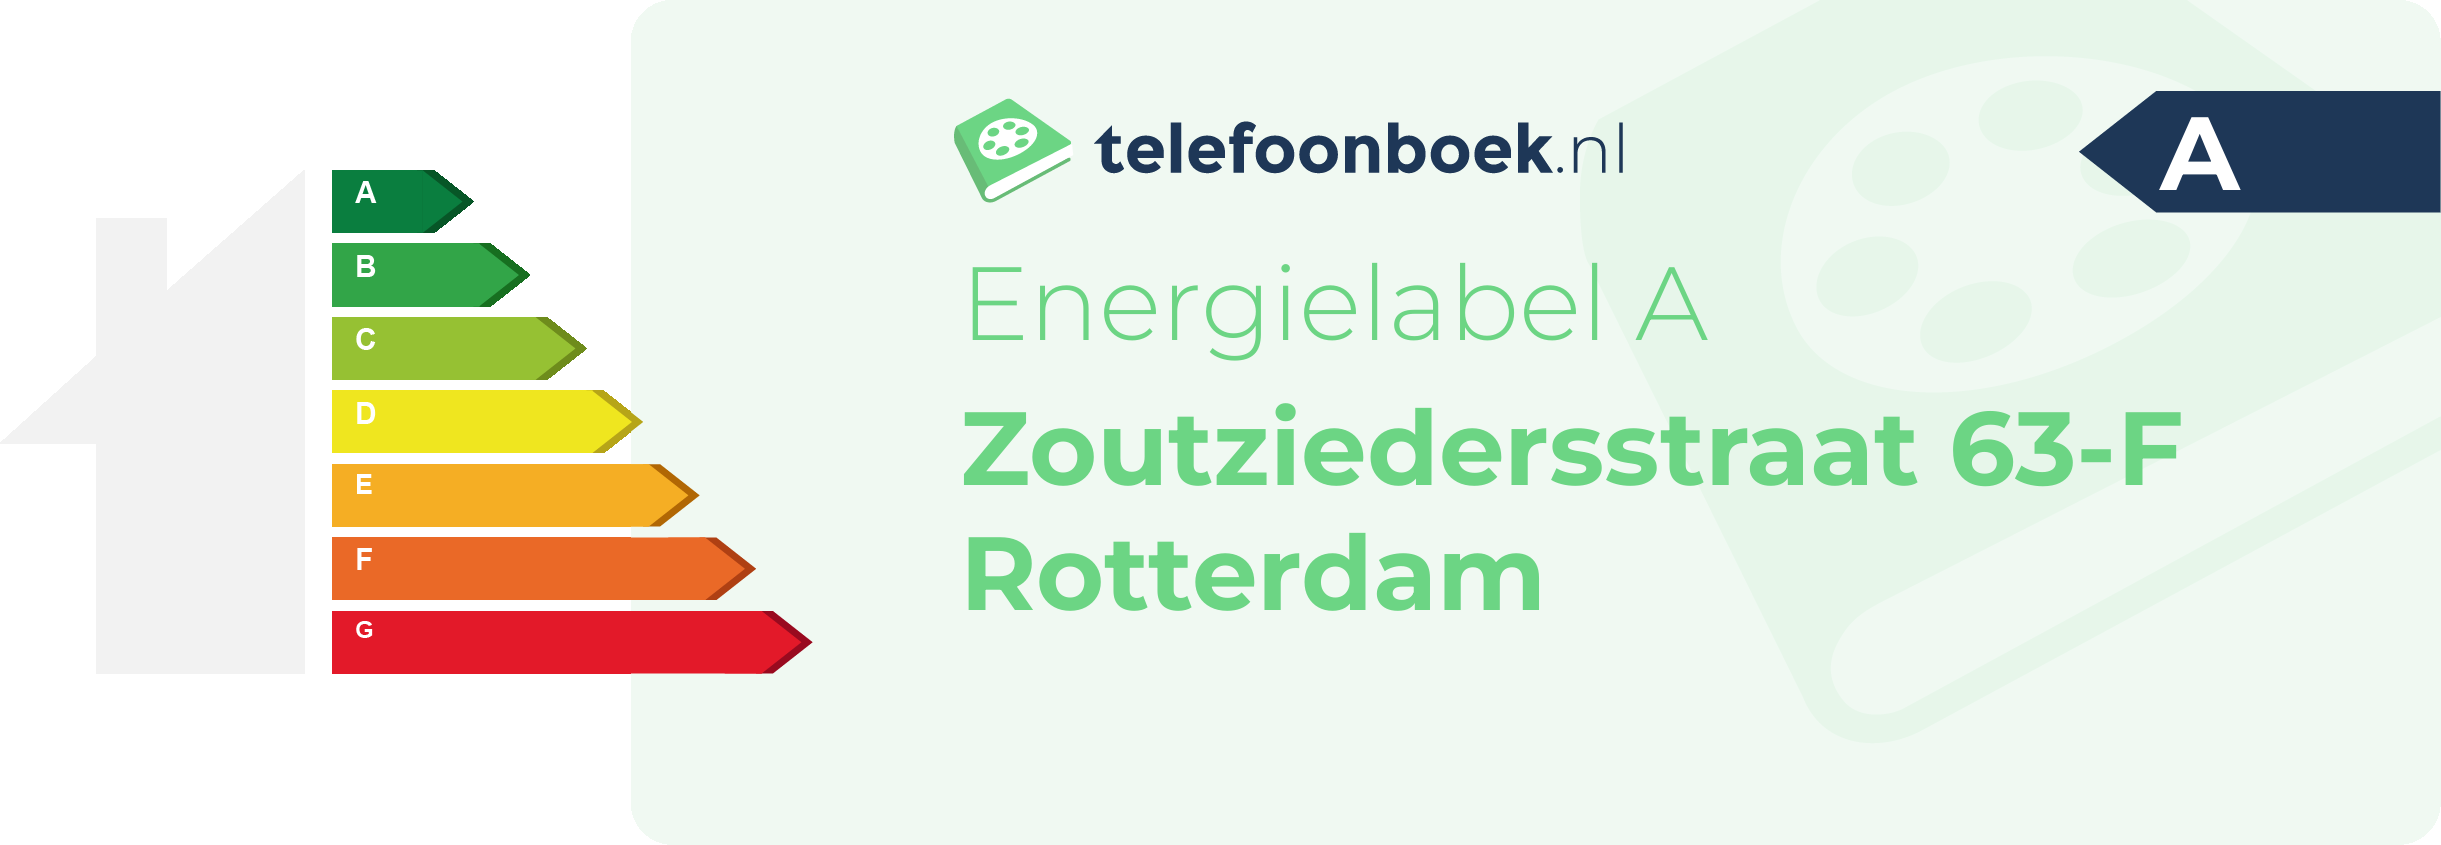 Energielabel Zoutziedersstraat 63-F Rotterdam